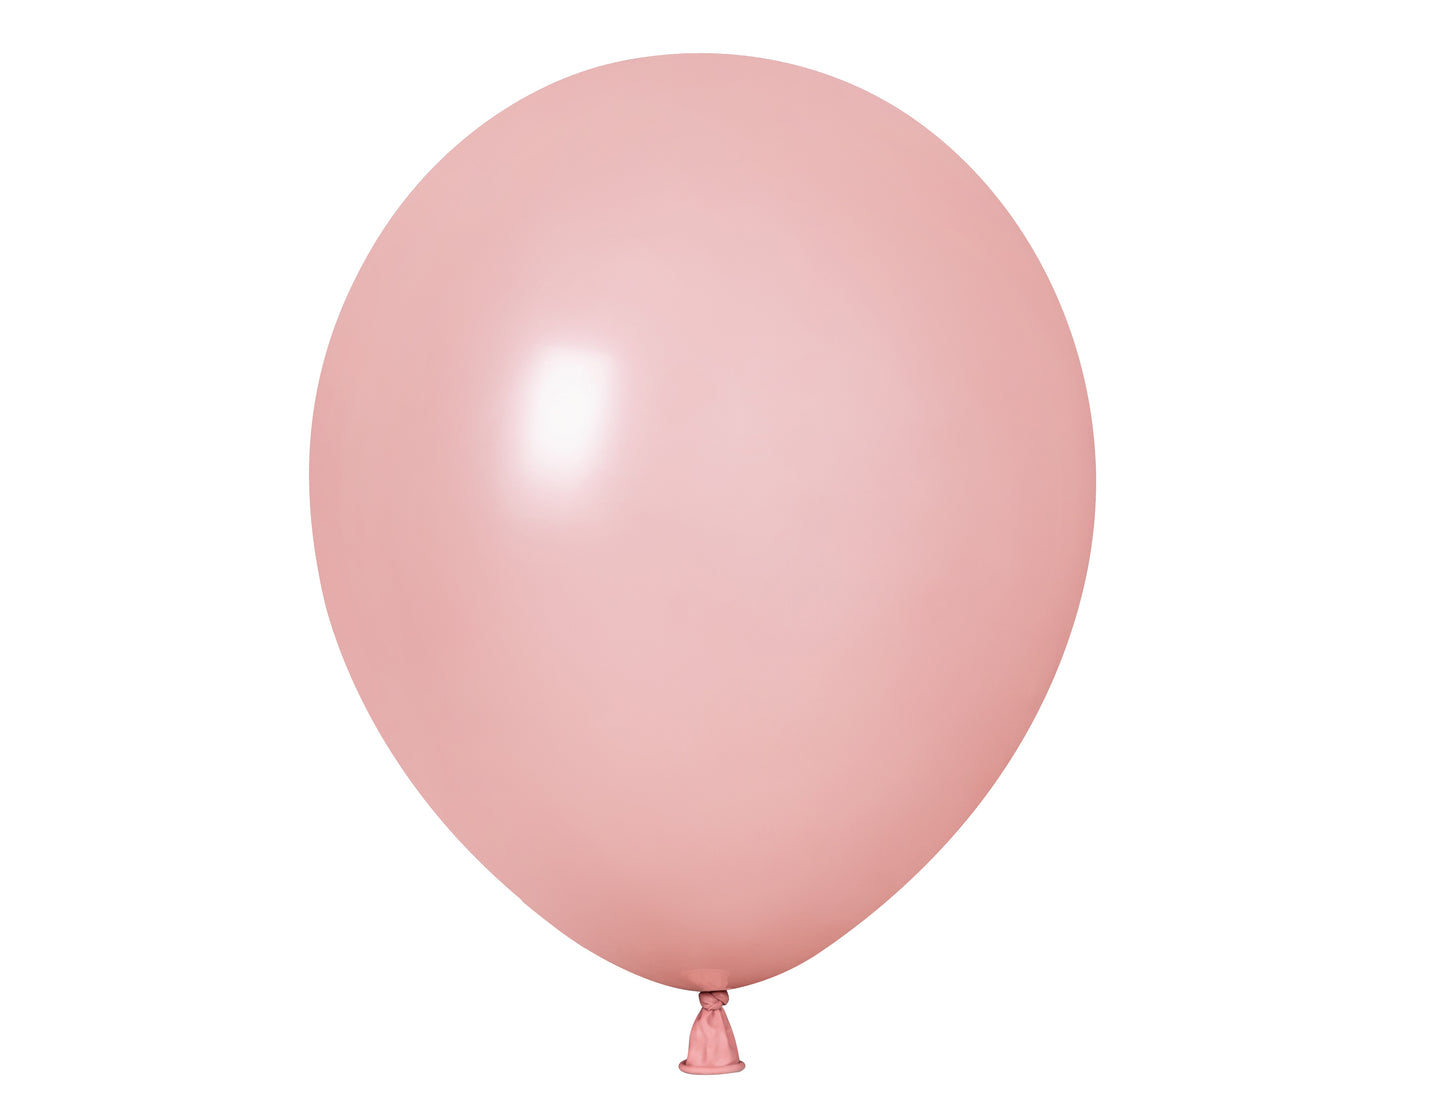 Winntex Premium 12" Rosewood Latex Balloon 100ct